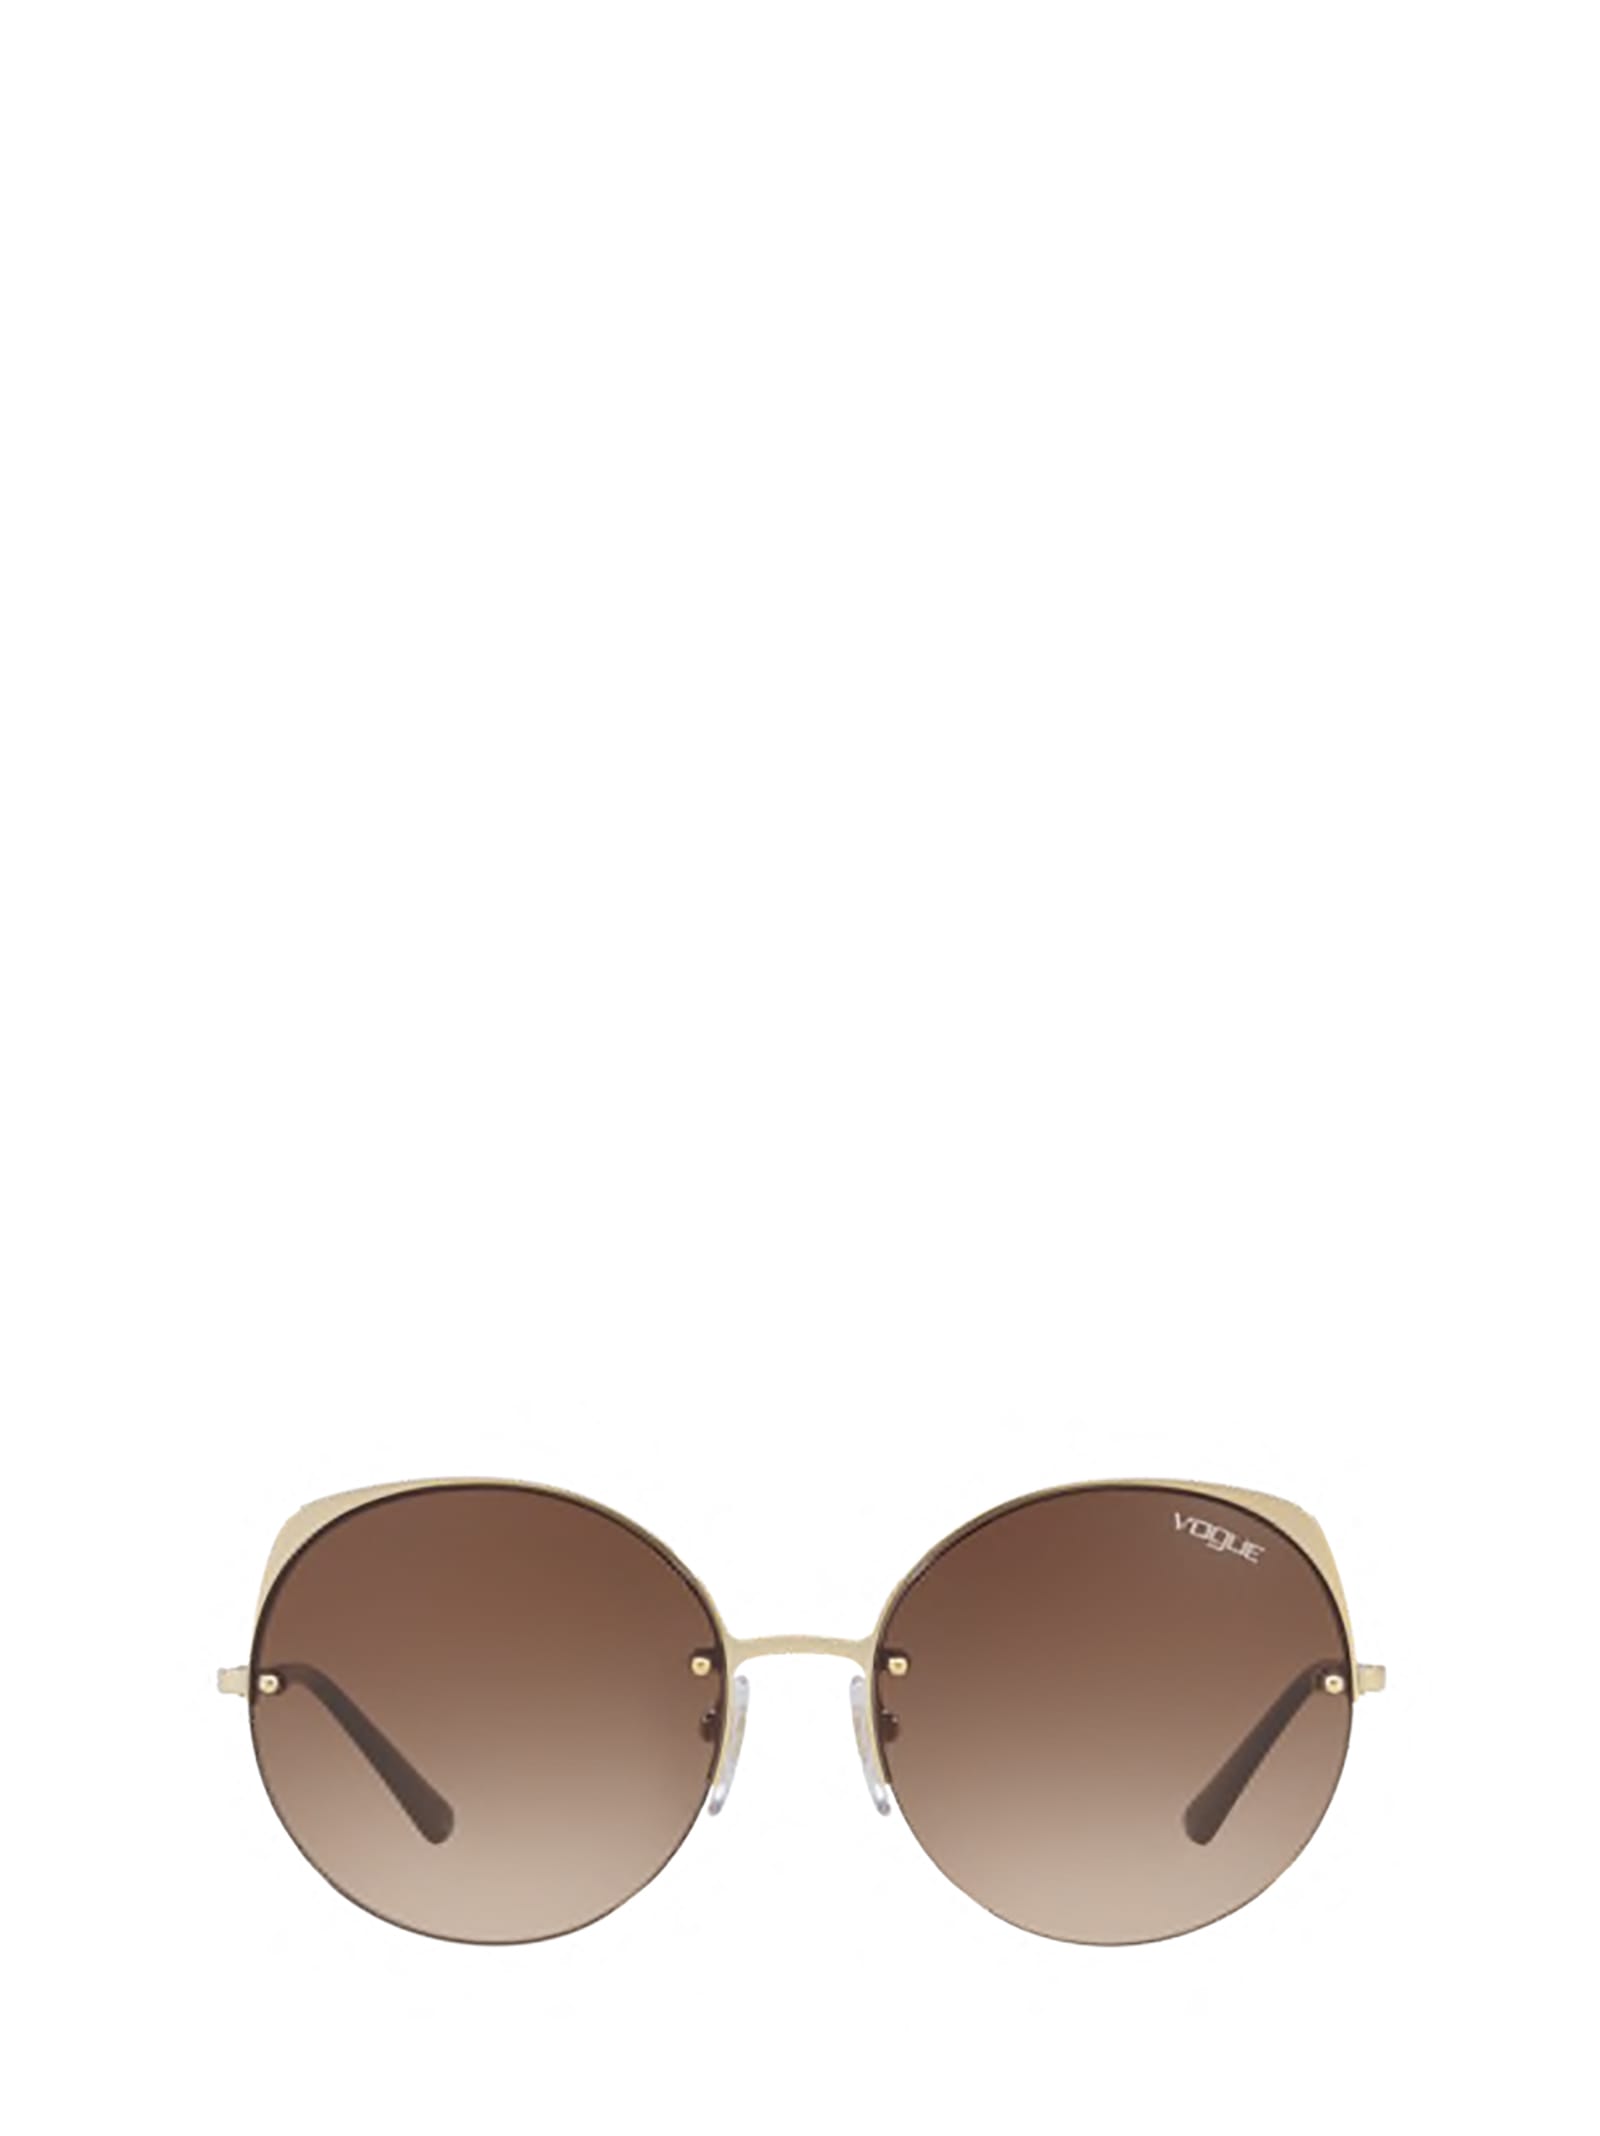 Vogue Eyewear Vogue Vo4081s Pale Gold Sunglasses